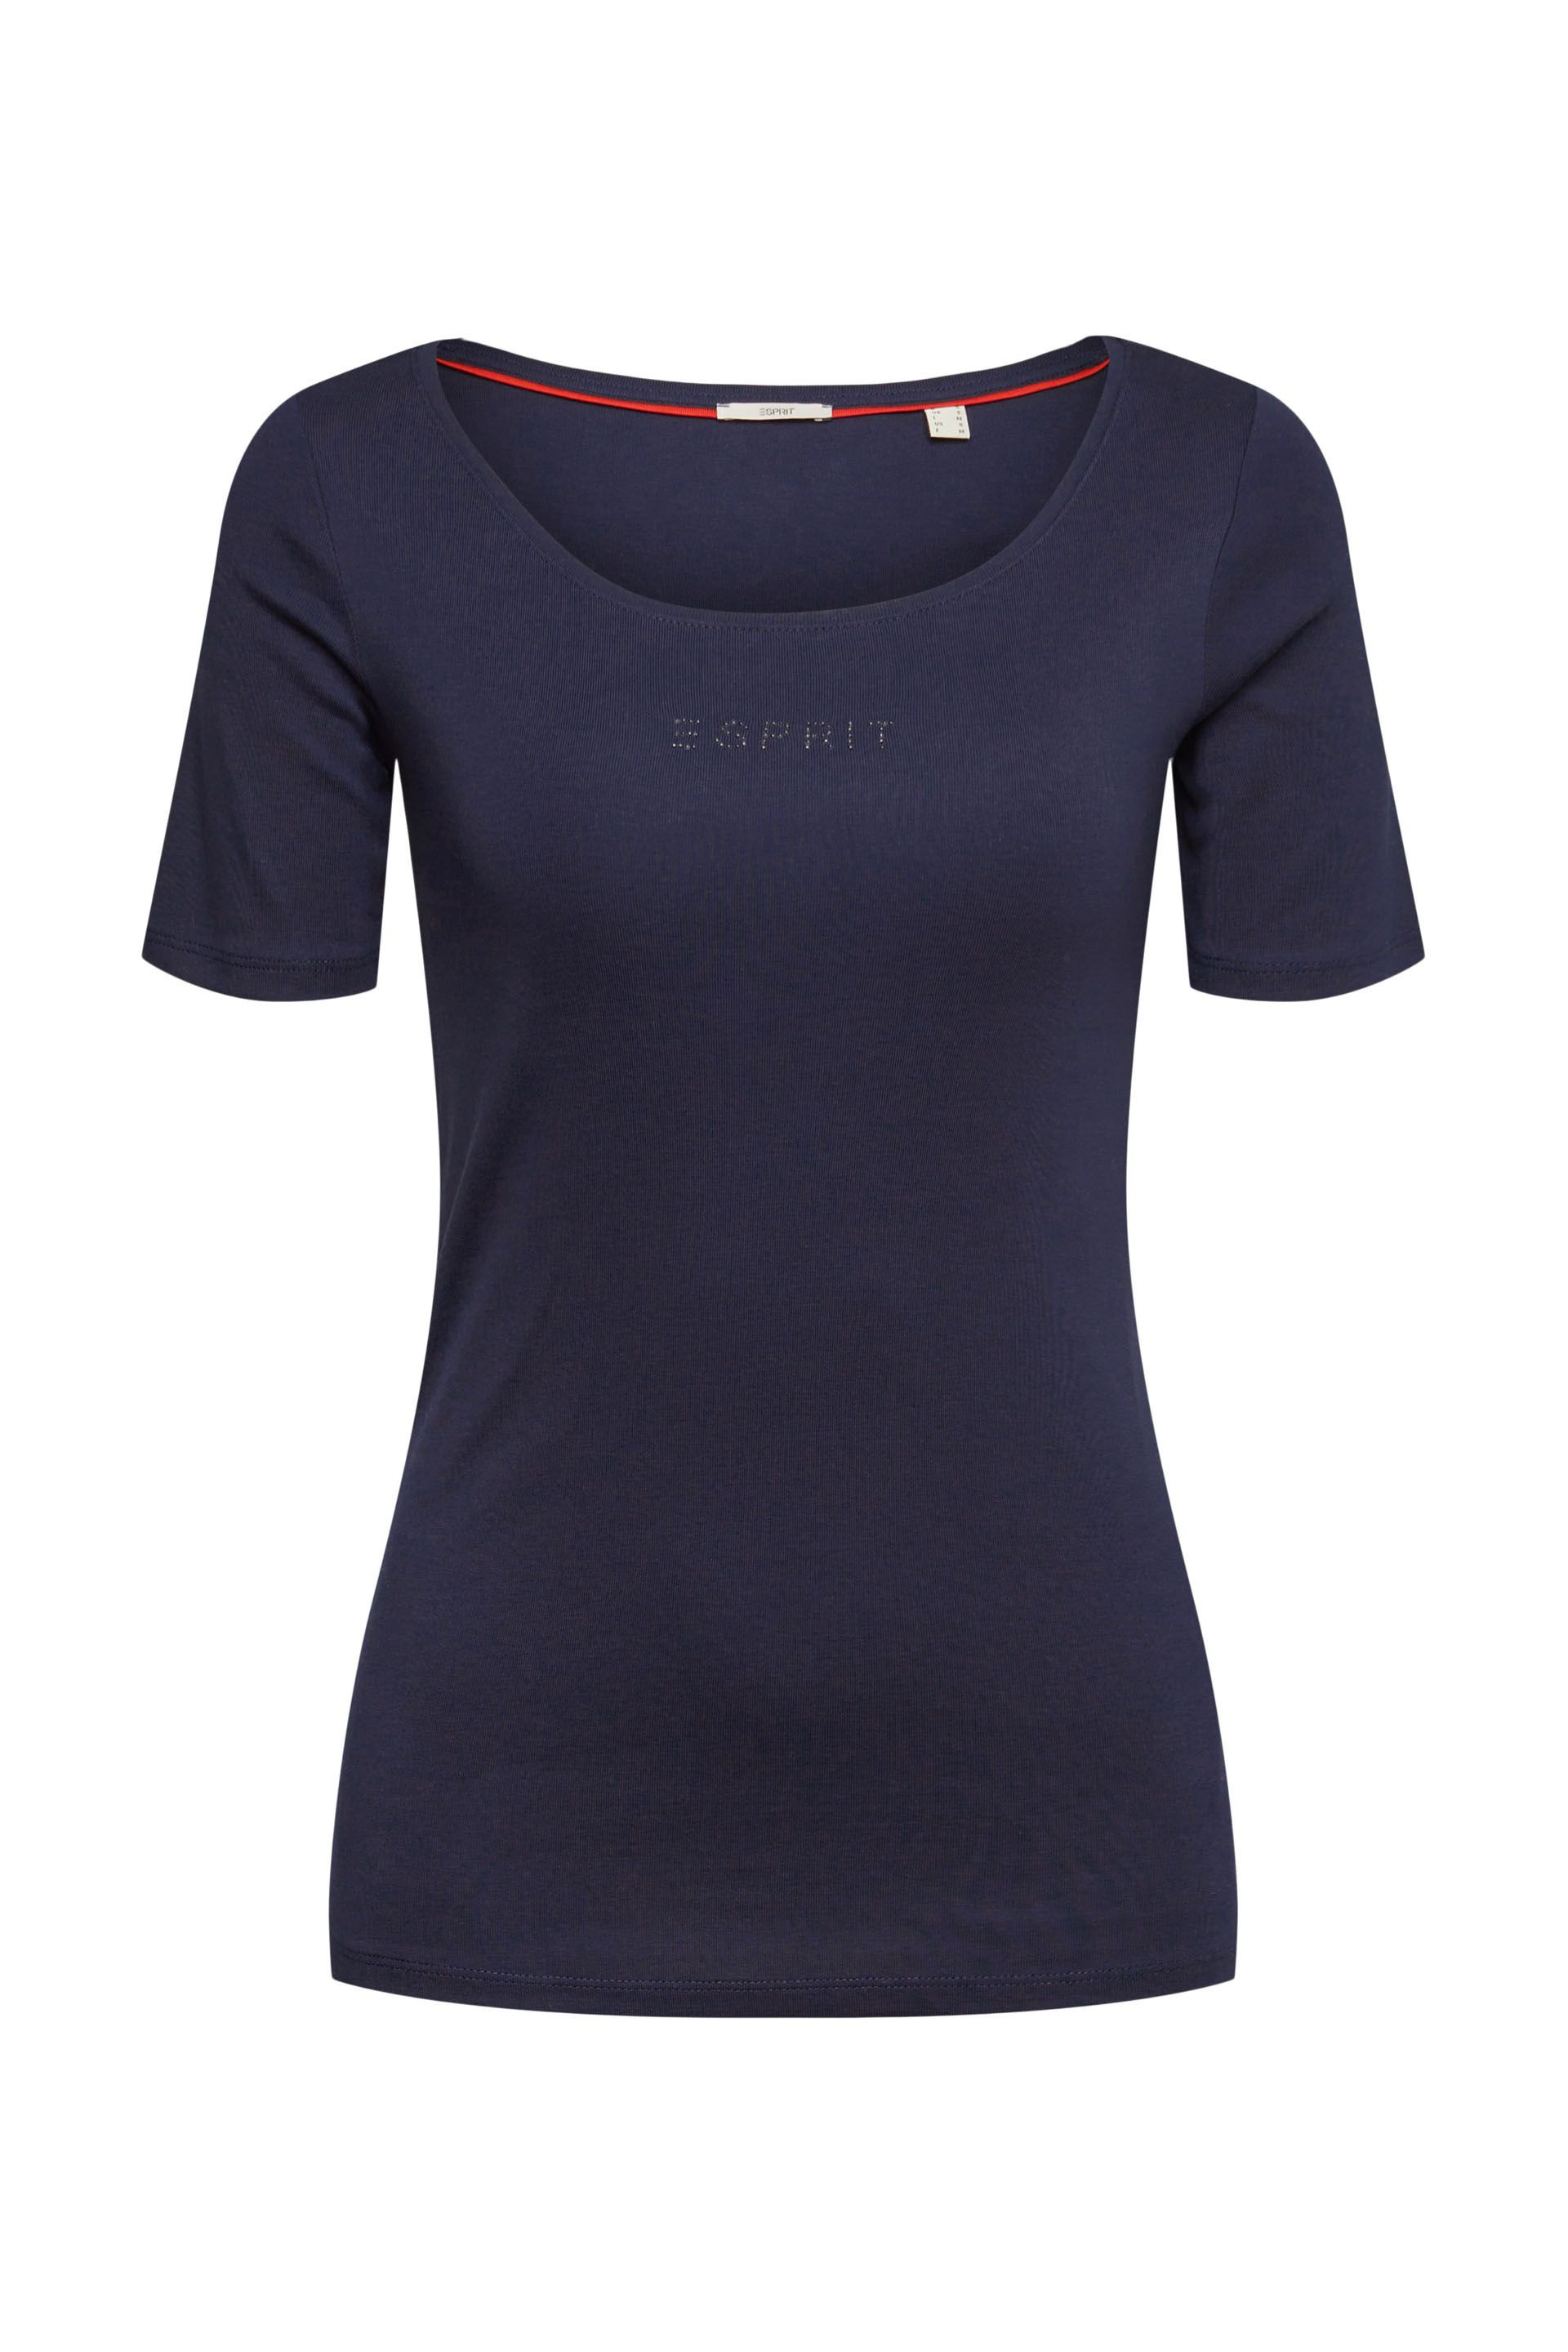 Esprit - Cotton logo T-shirt, Dark Blue, large image number 0